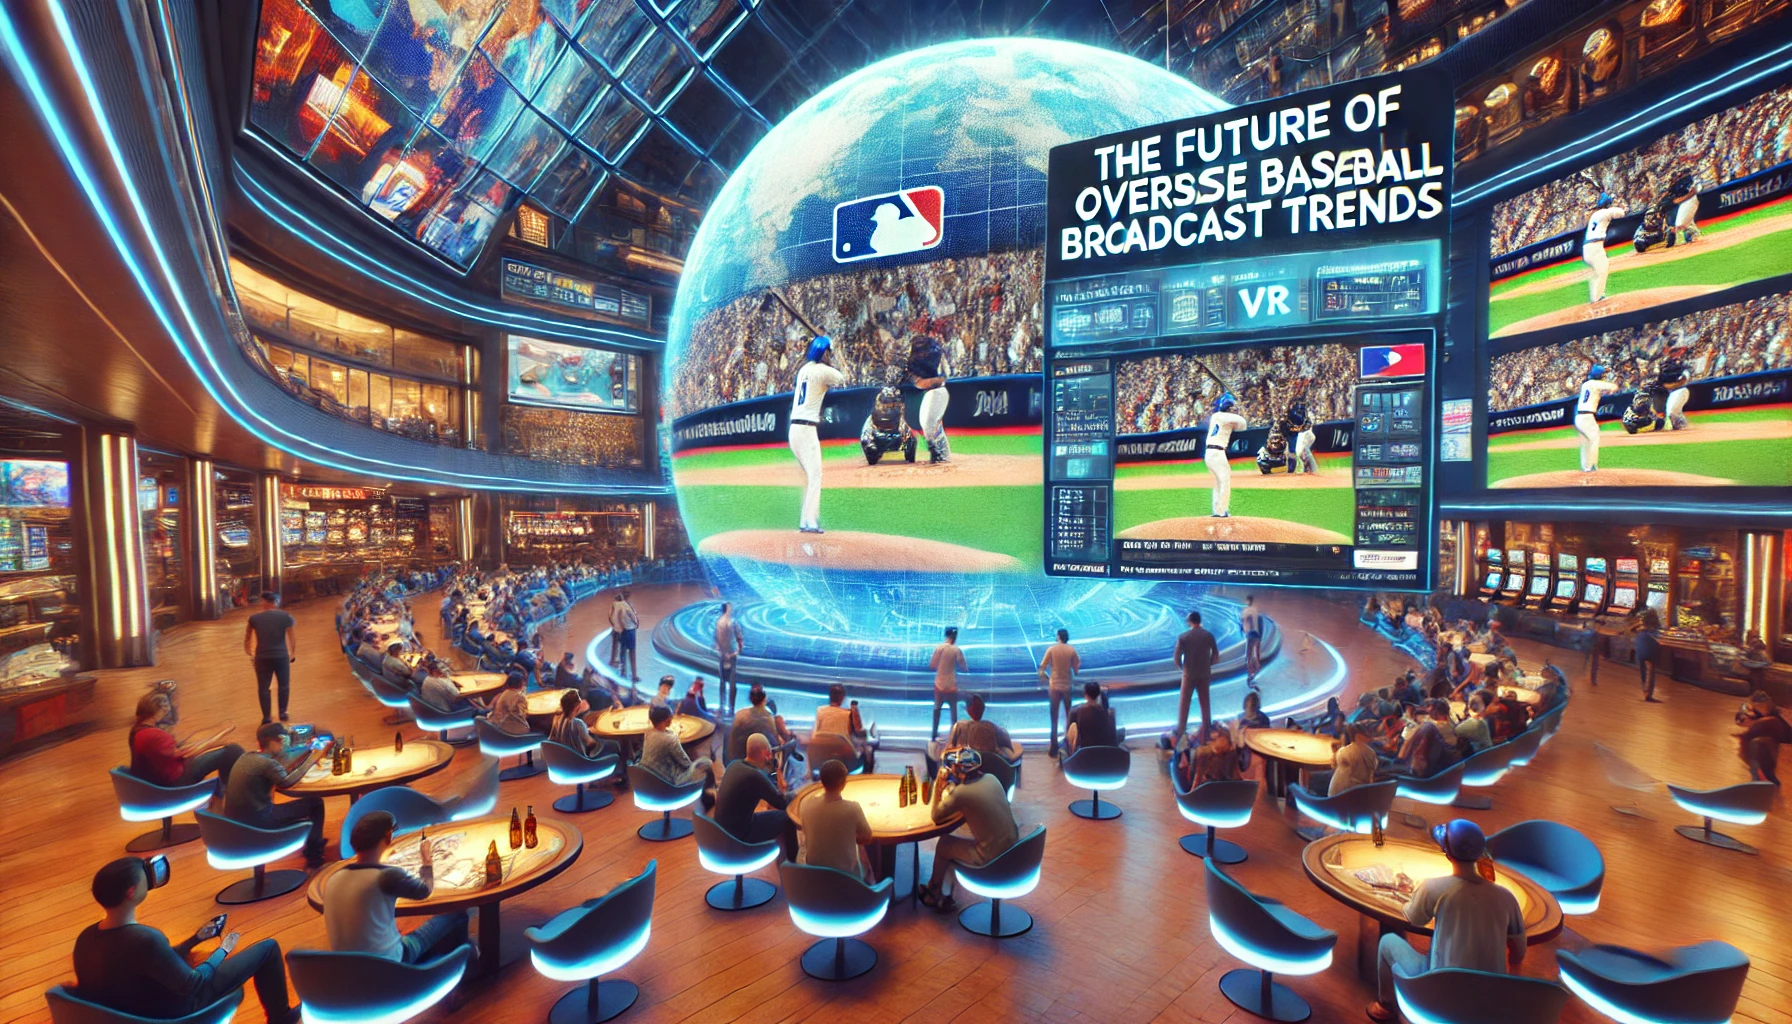 The Future of Overseas Baseball Broadcast Trends